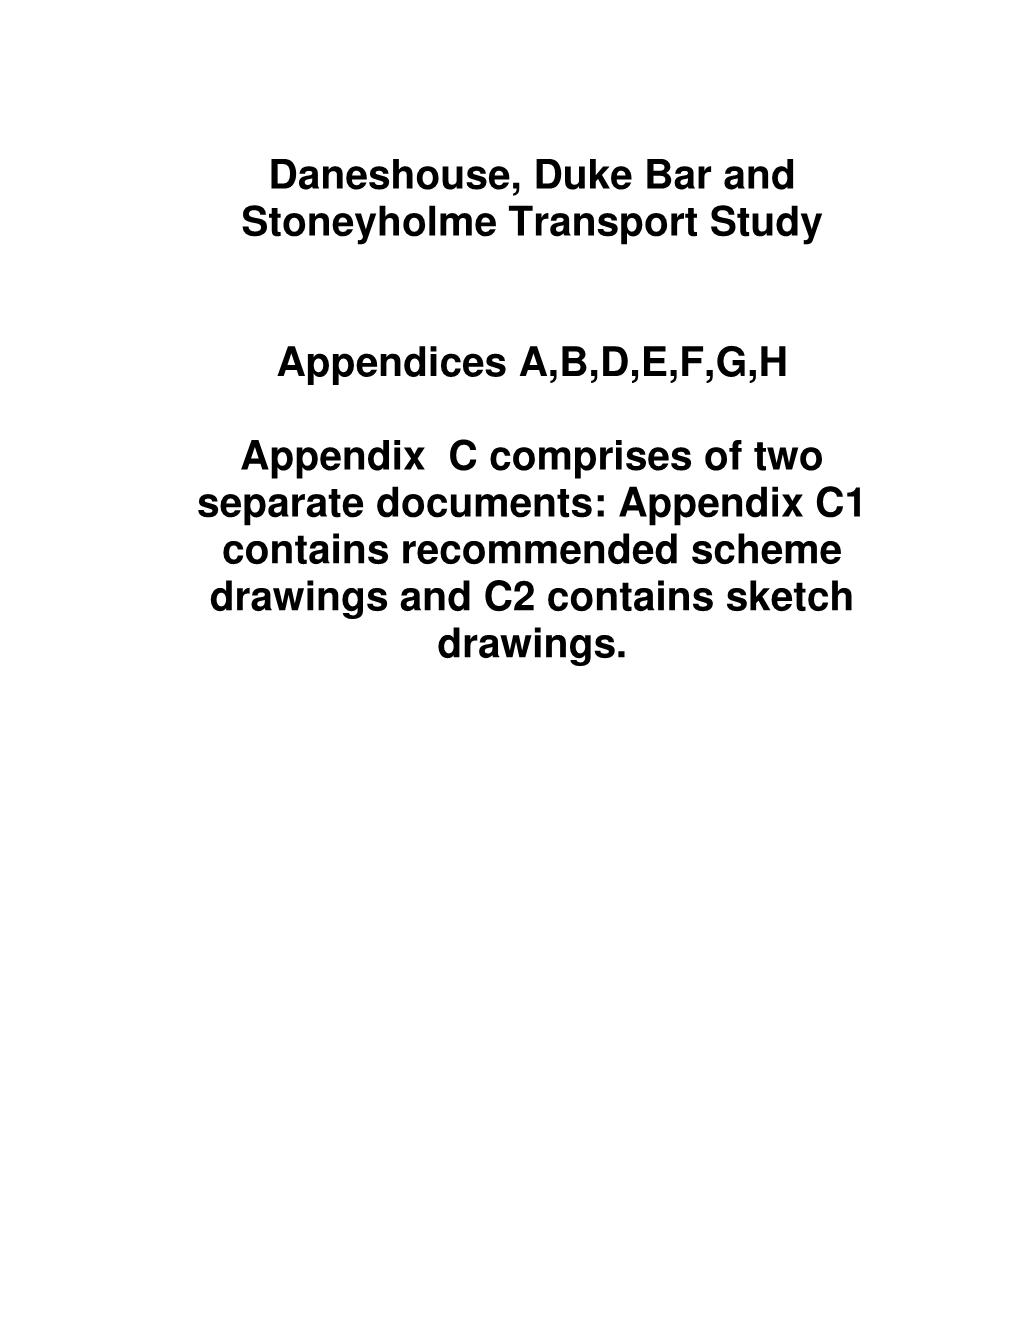 Daneshouse, Duke Bar and Stoneyholme Transport Study